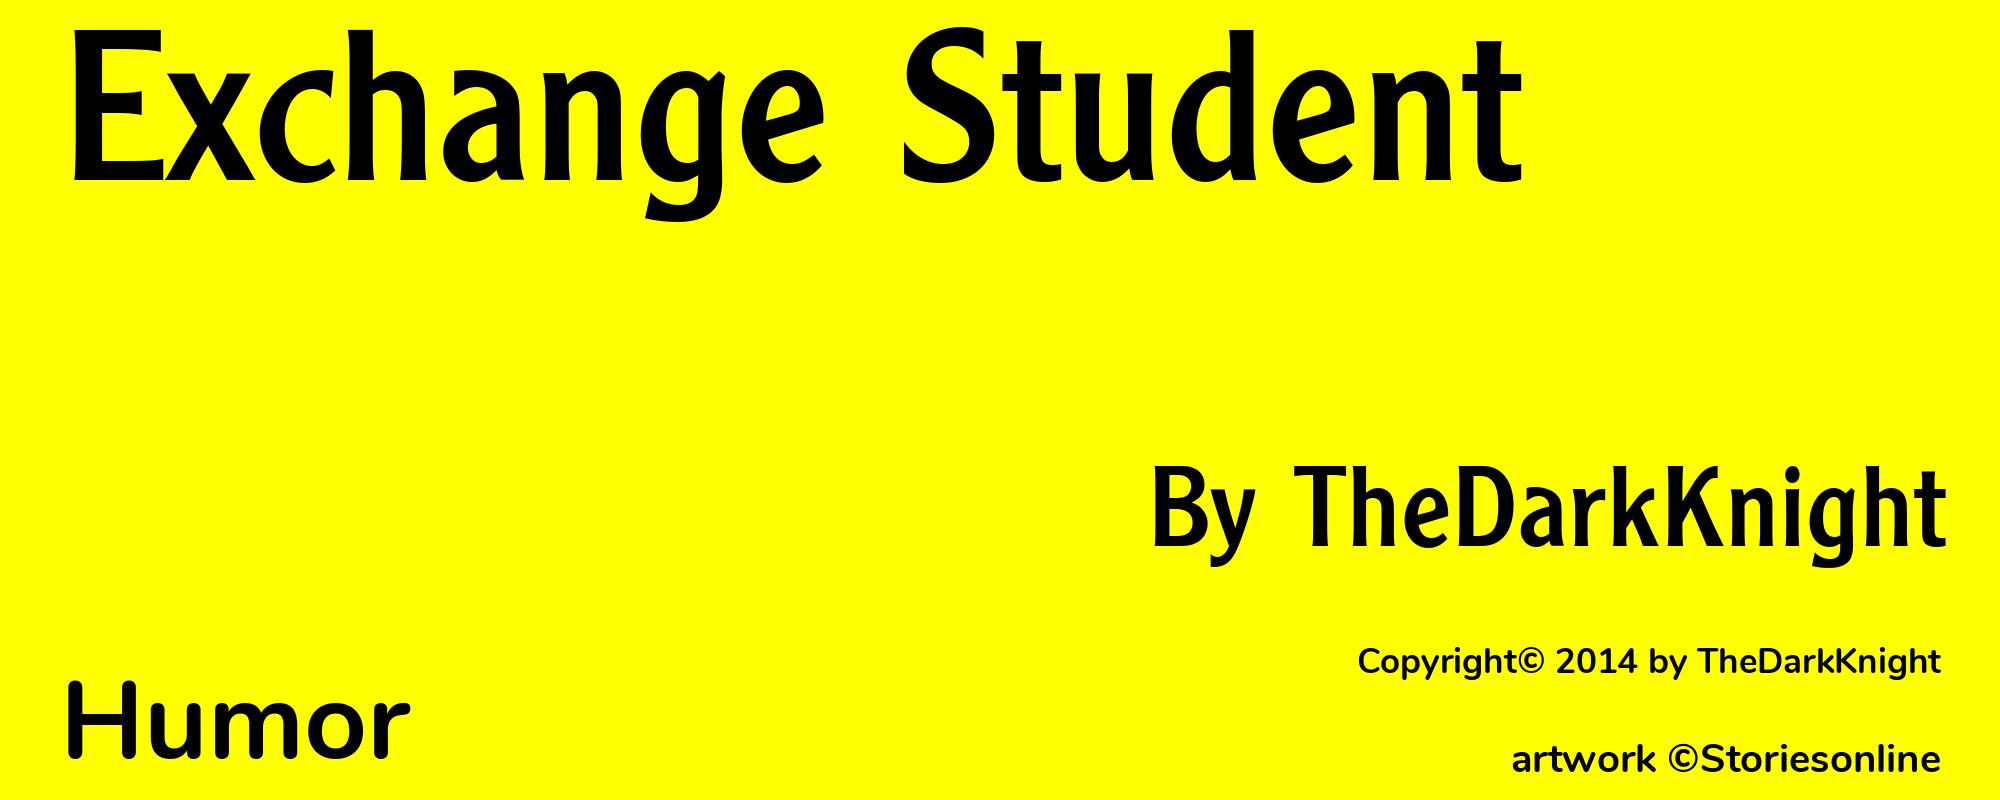 Exchange Student - Cover